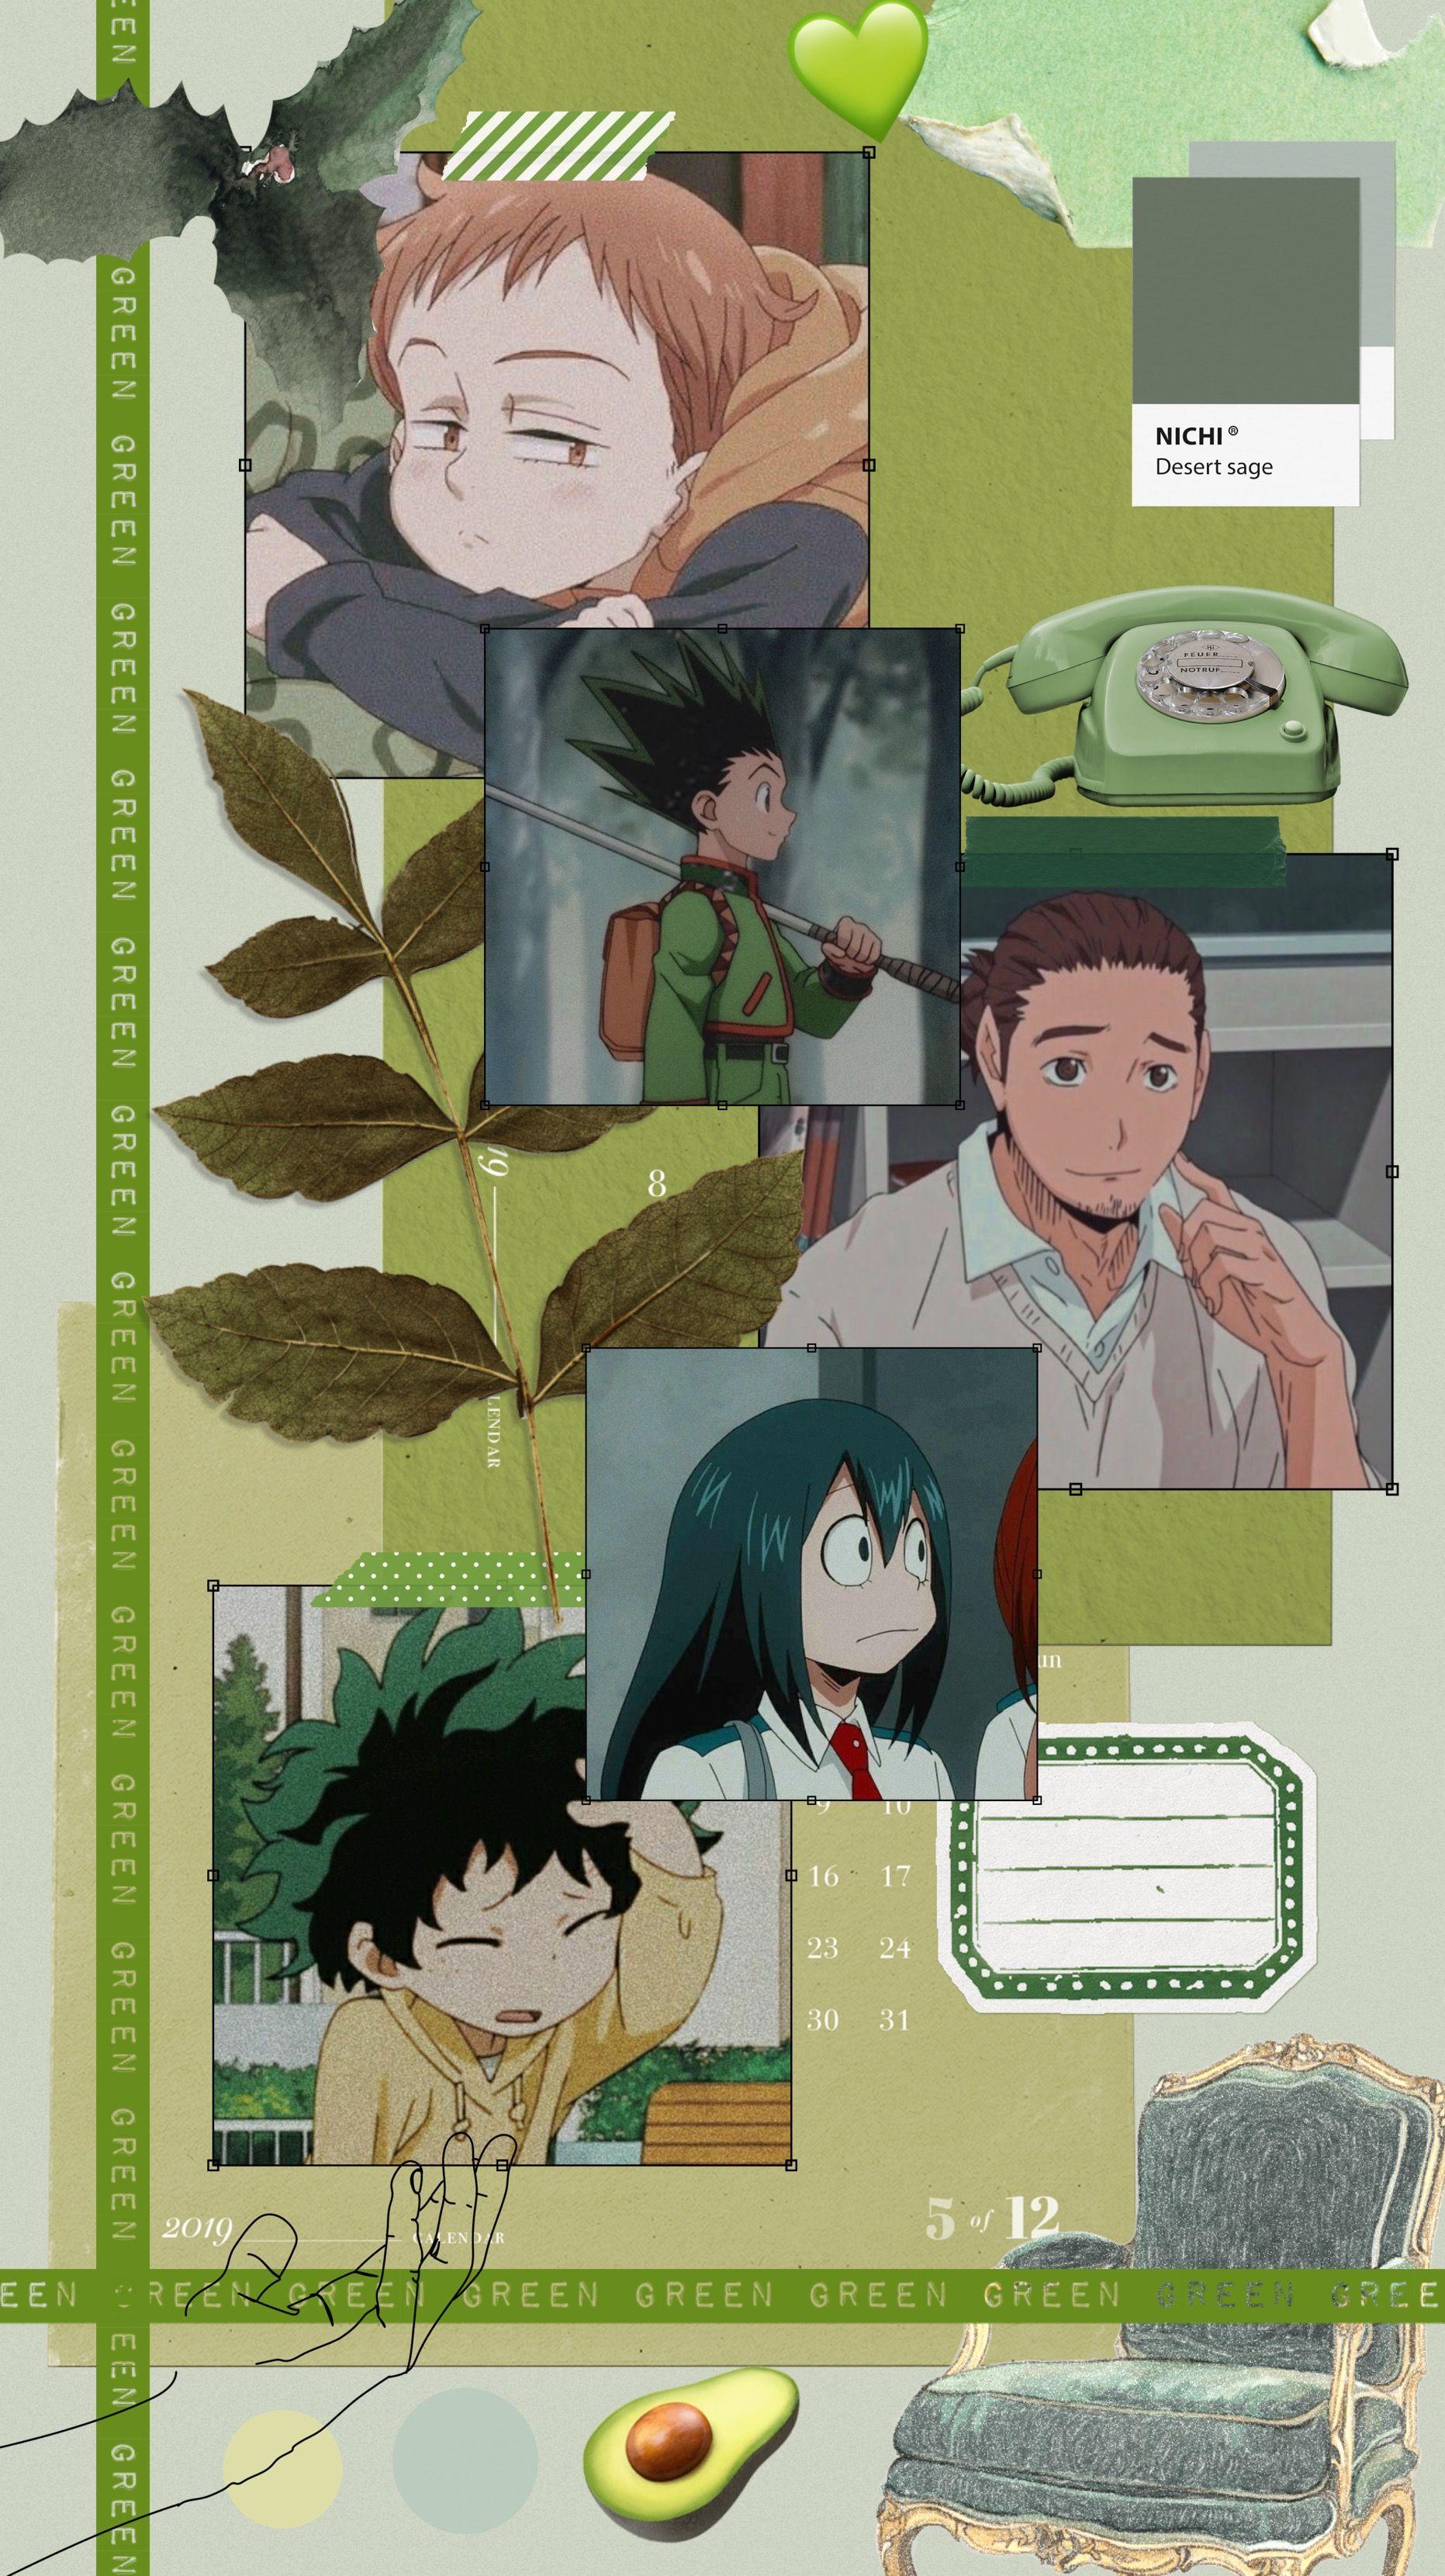 Anime Wallpaper Wallpaper 72 images